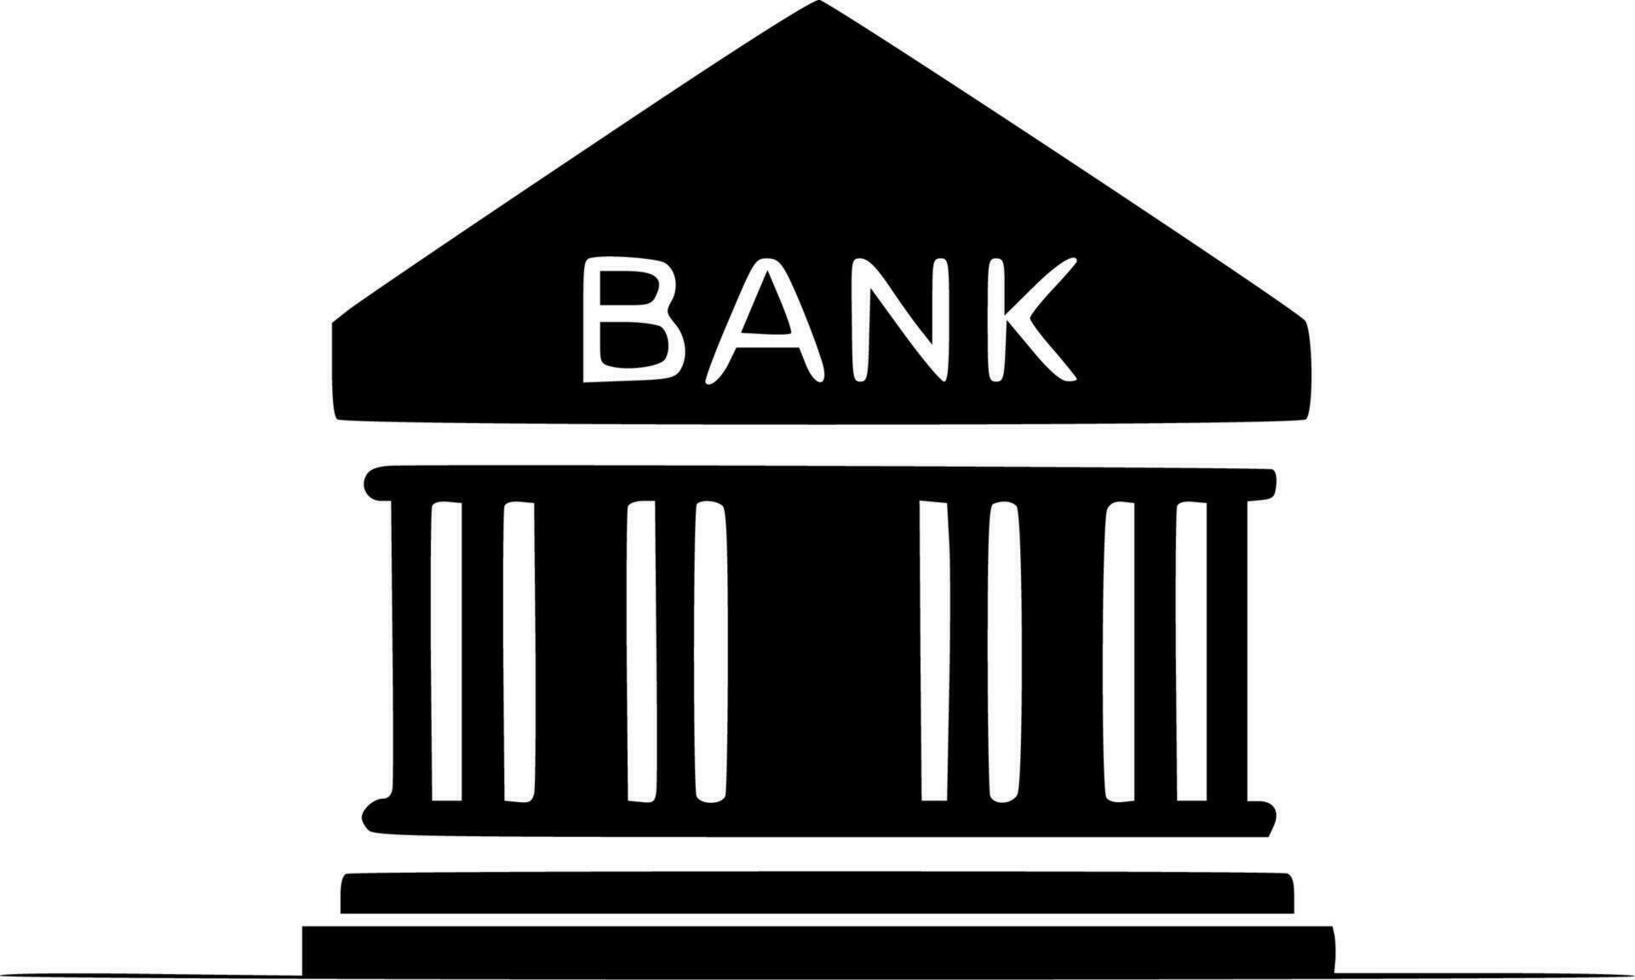 banco - minimalista e plano logotipo - vetor ilustração